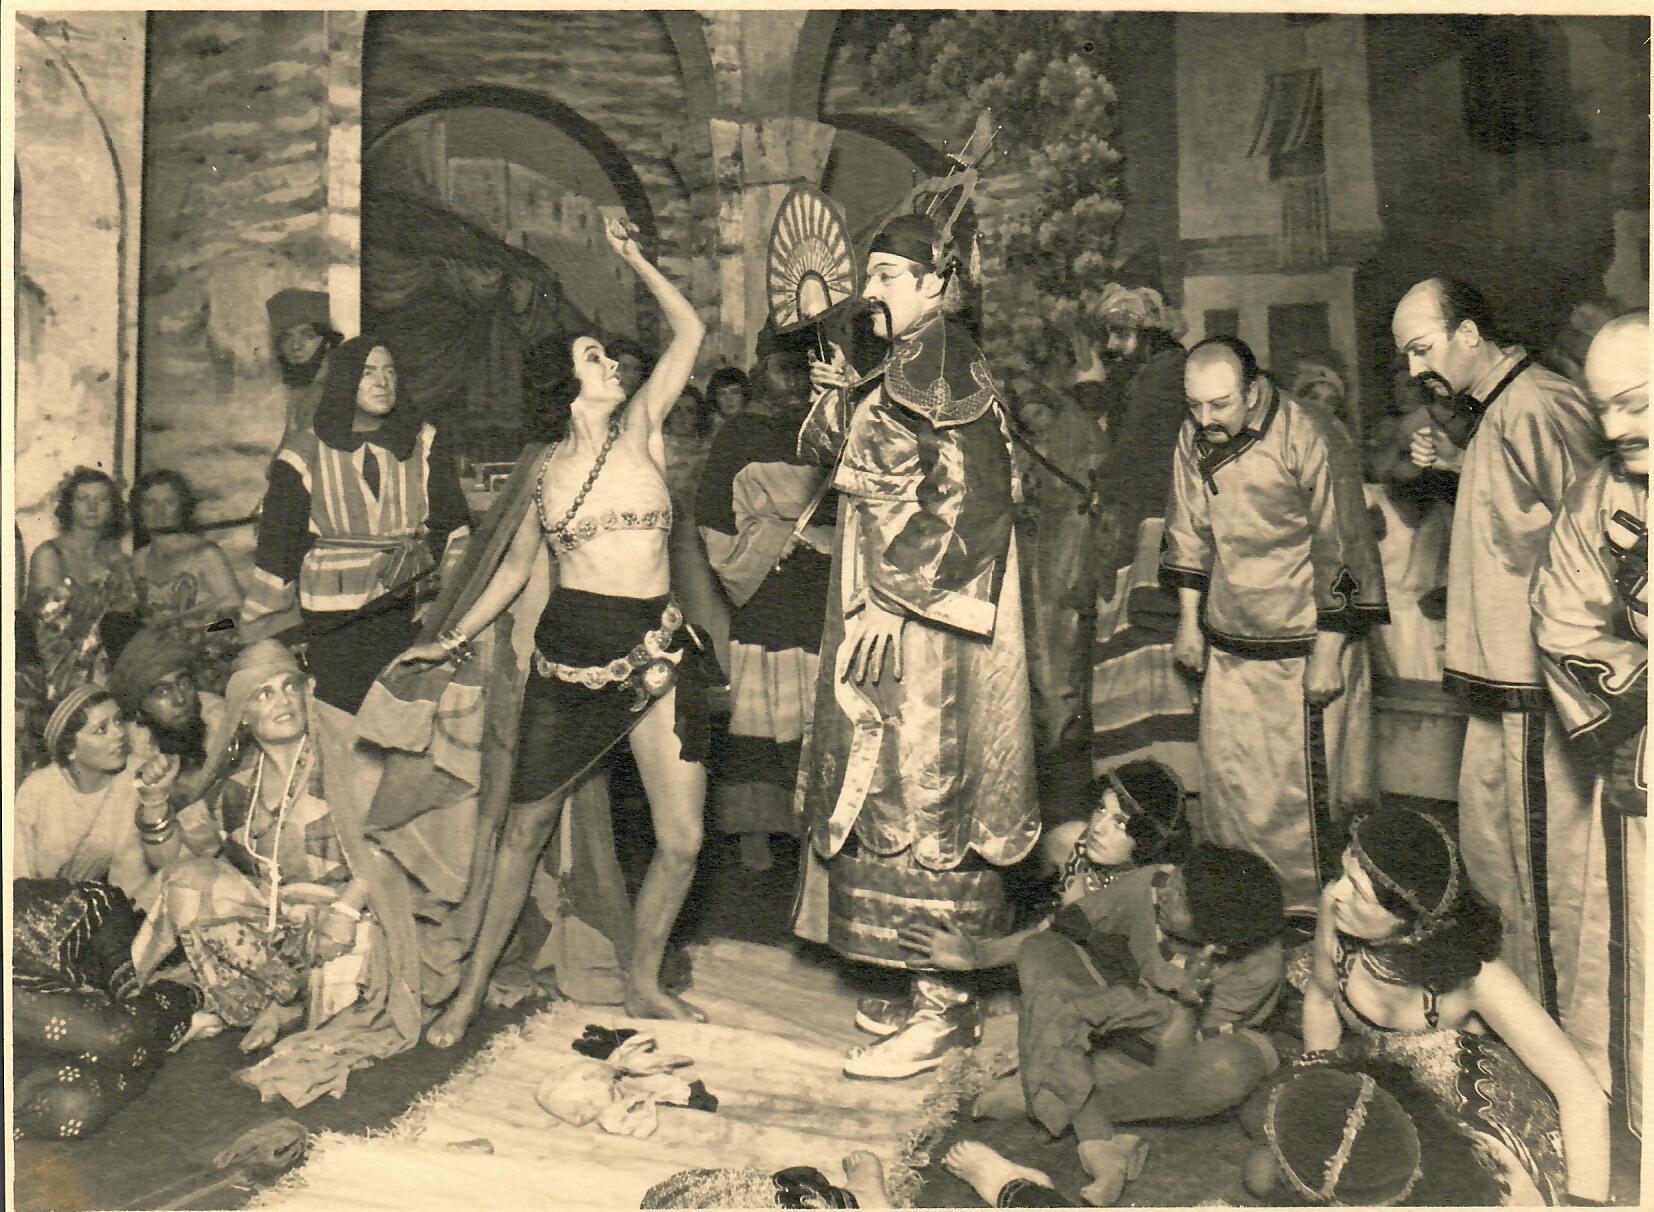 Sedos’ 1935 production of Chu Chin Chow